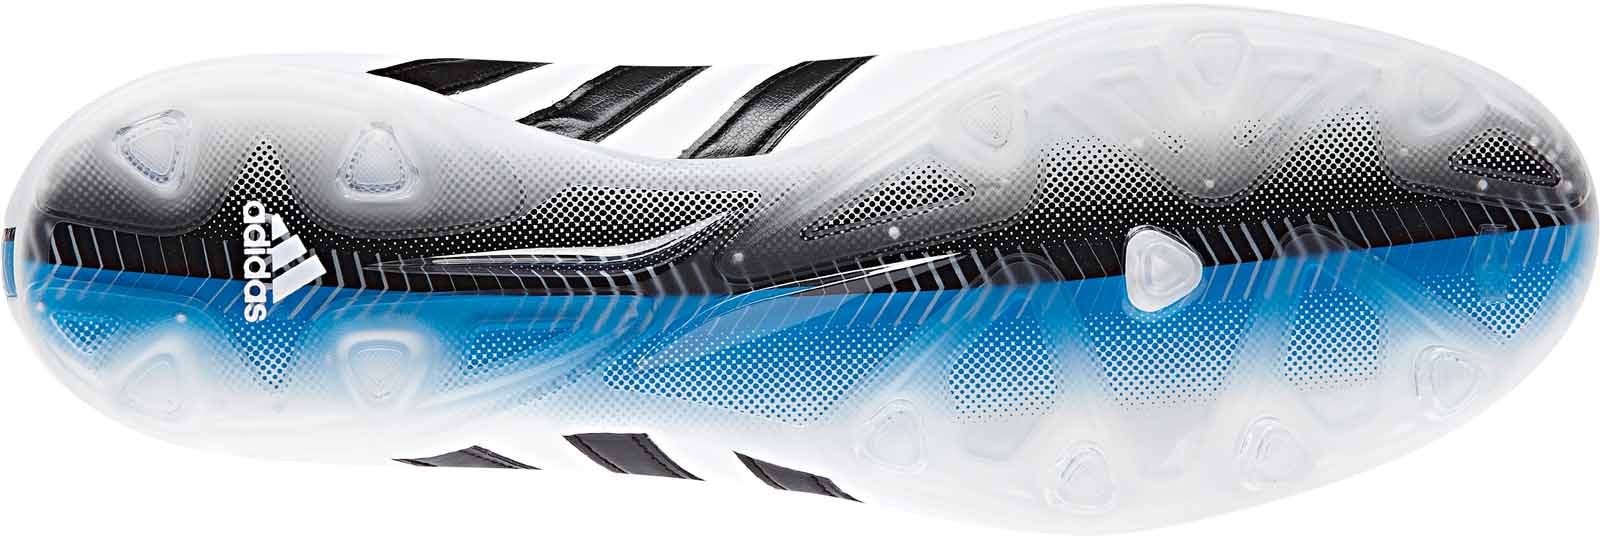 White Adidas Adipure 11pro 2015 Boot Released - Footy Headlines